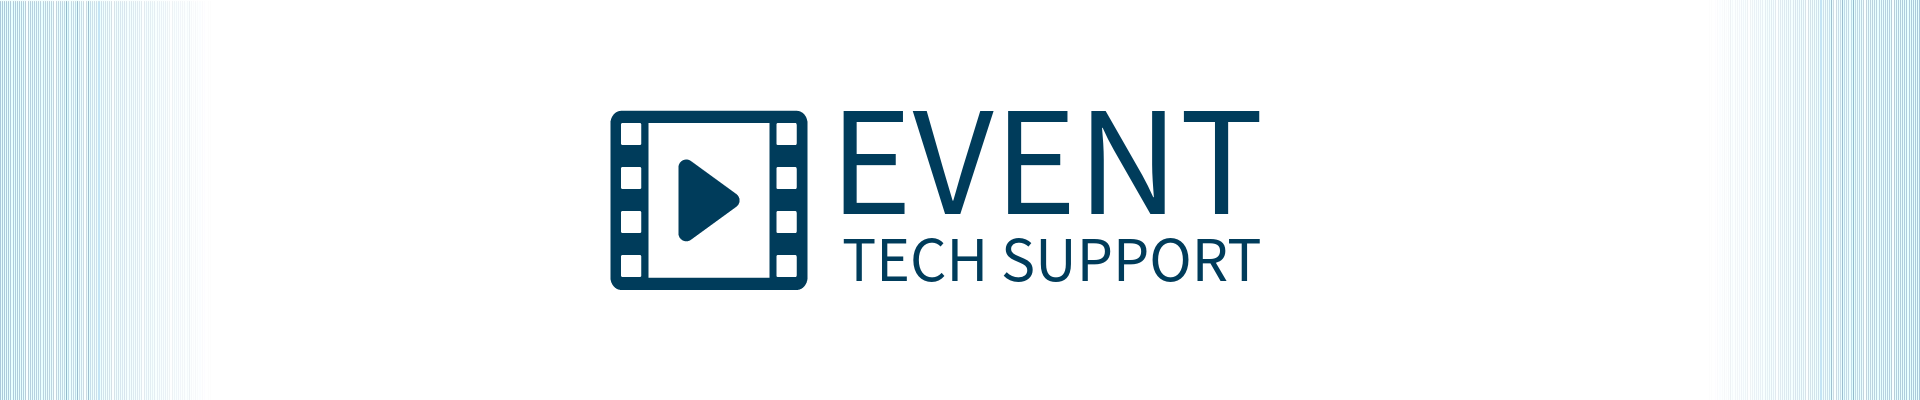 Event Tech Support Banner